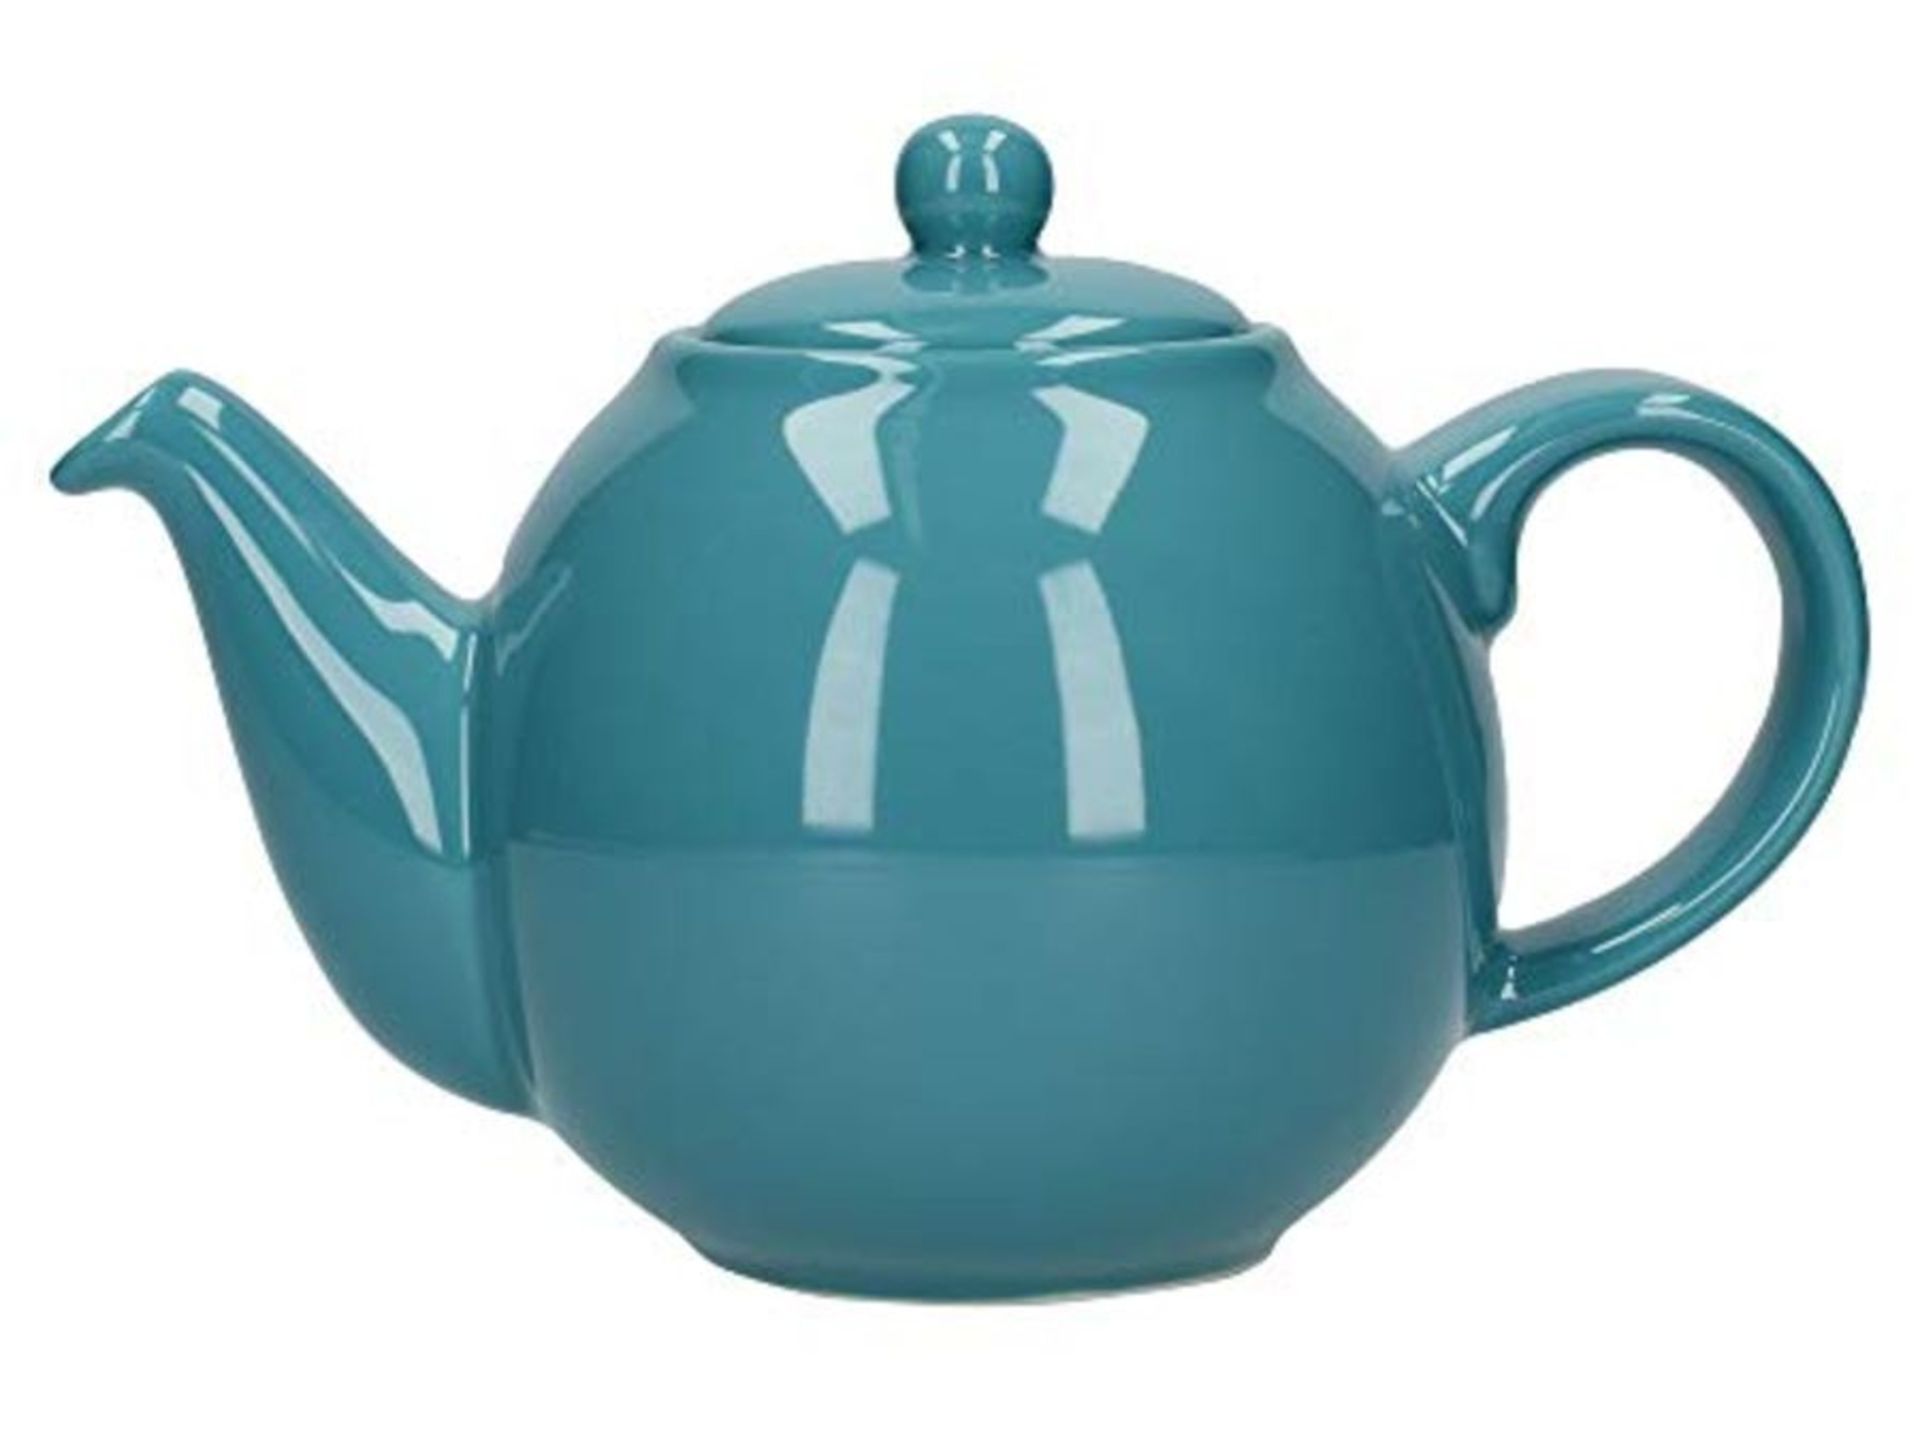 London Pottery Globe Small Teapot with Strainer, Ceramic, Aqua, 2 Cup Capacity (500 ml